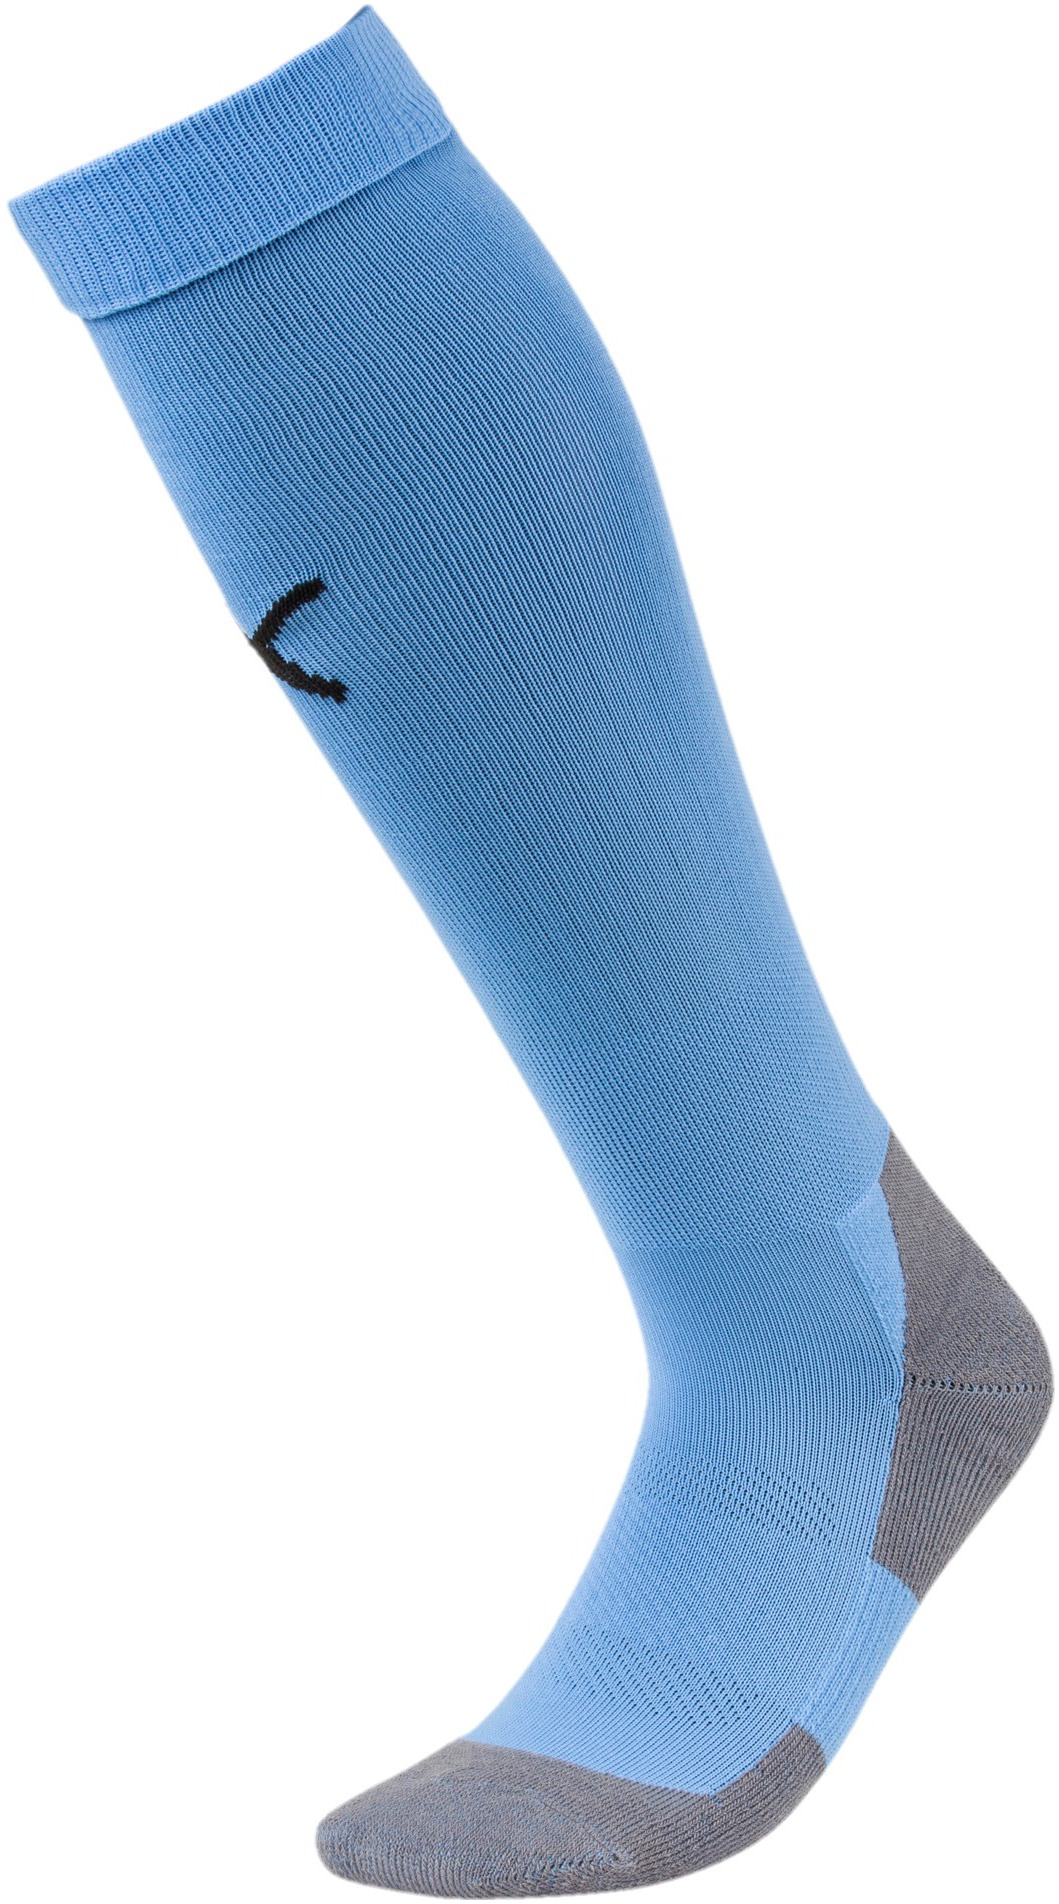 Mens football socks Puma TEAM LIGA SOCKS CORE blue | AD Sport.store